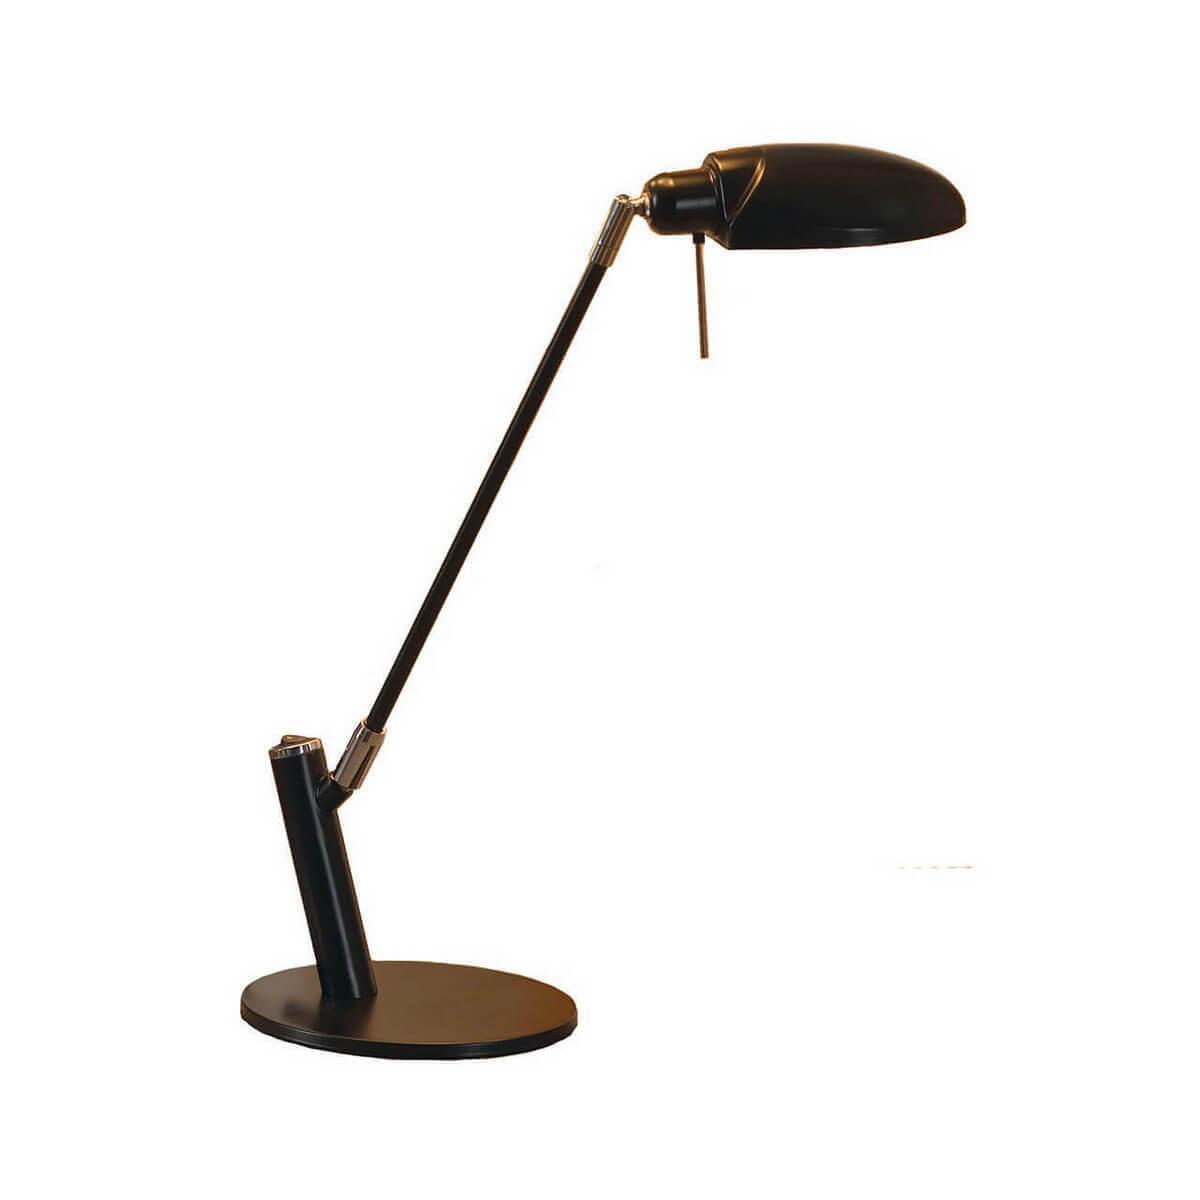 Настольная лампа Lussole Roma LST-4314-01 настенный светильник lightstar roma 718627